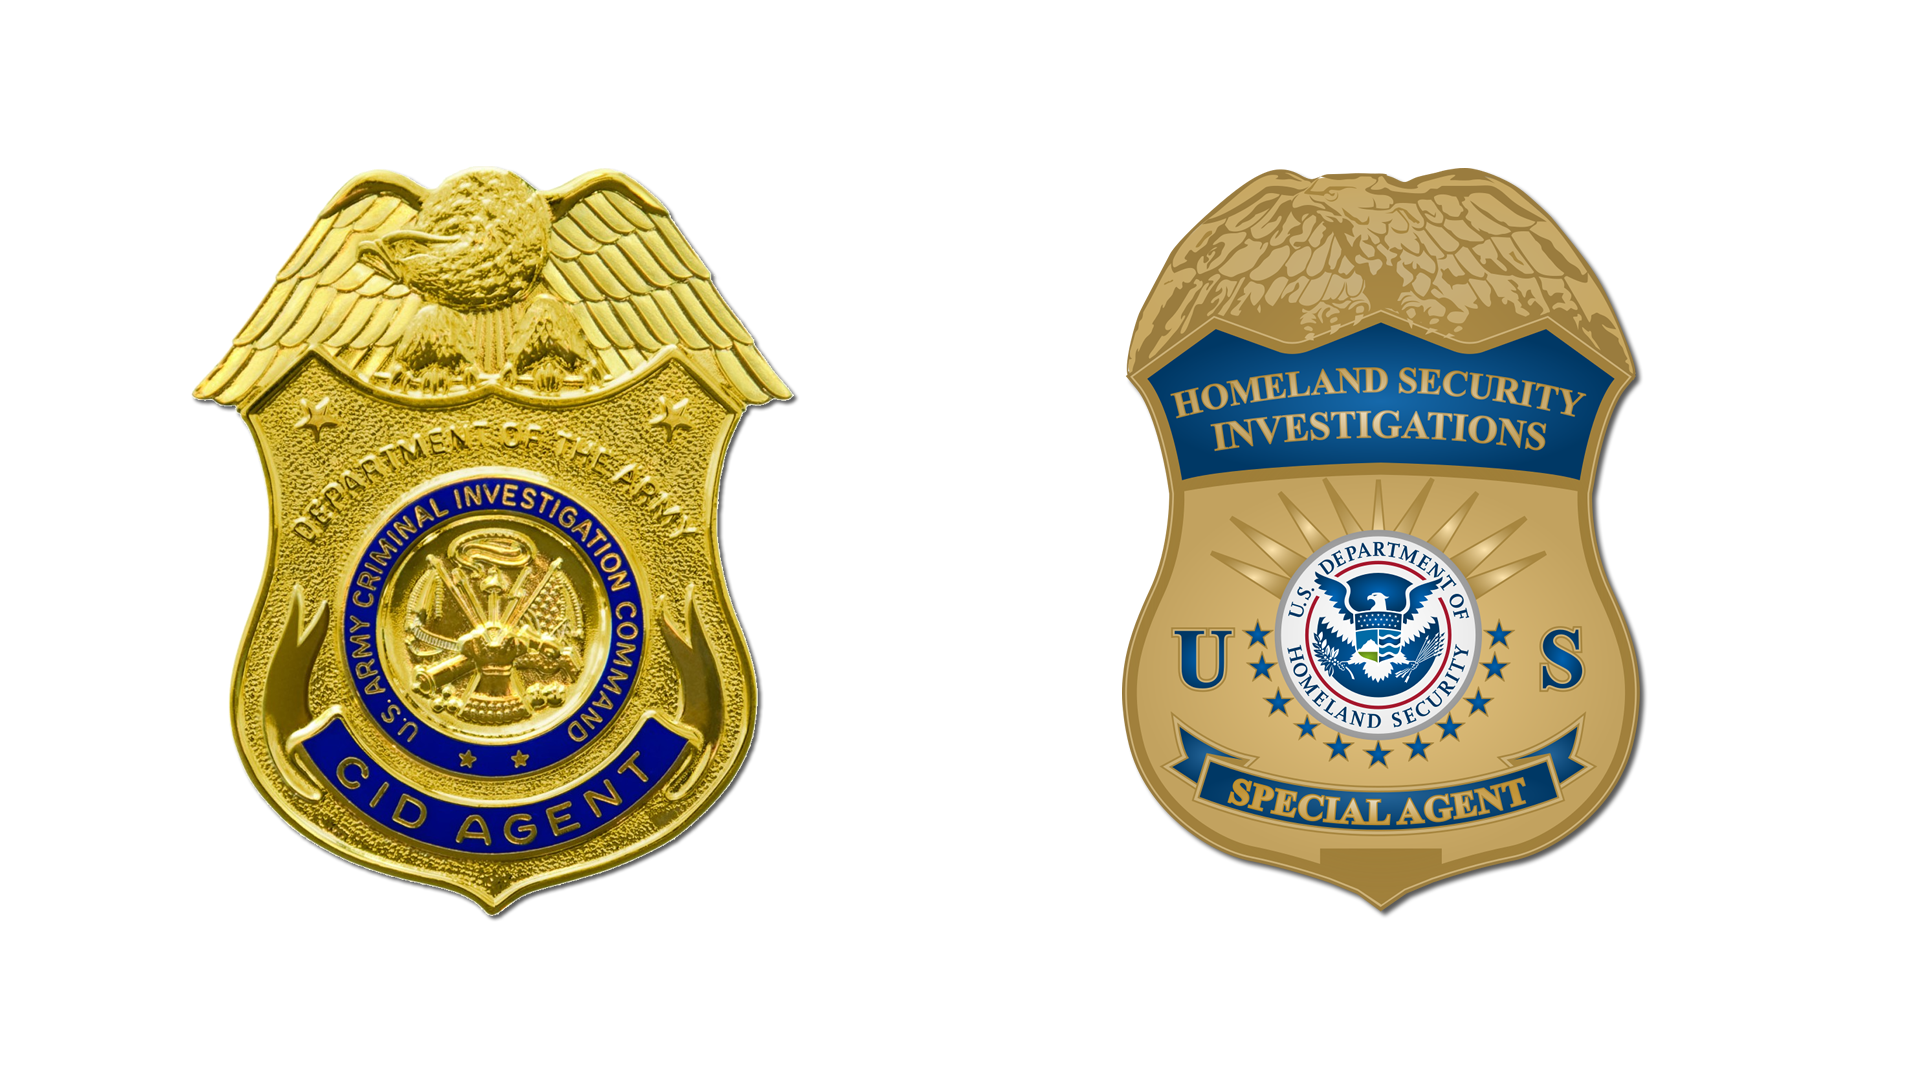 U.S. Army Criminal Investigation Division Command - USACIDC